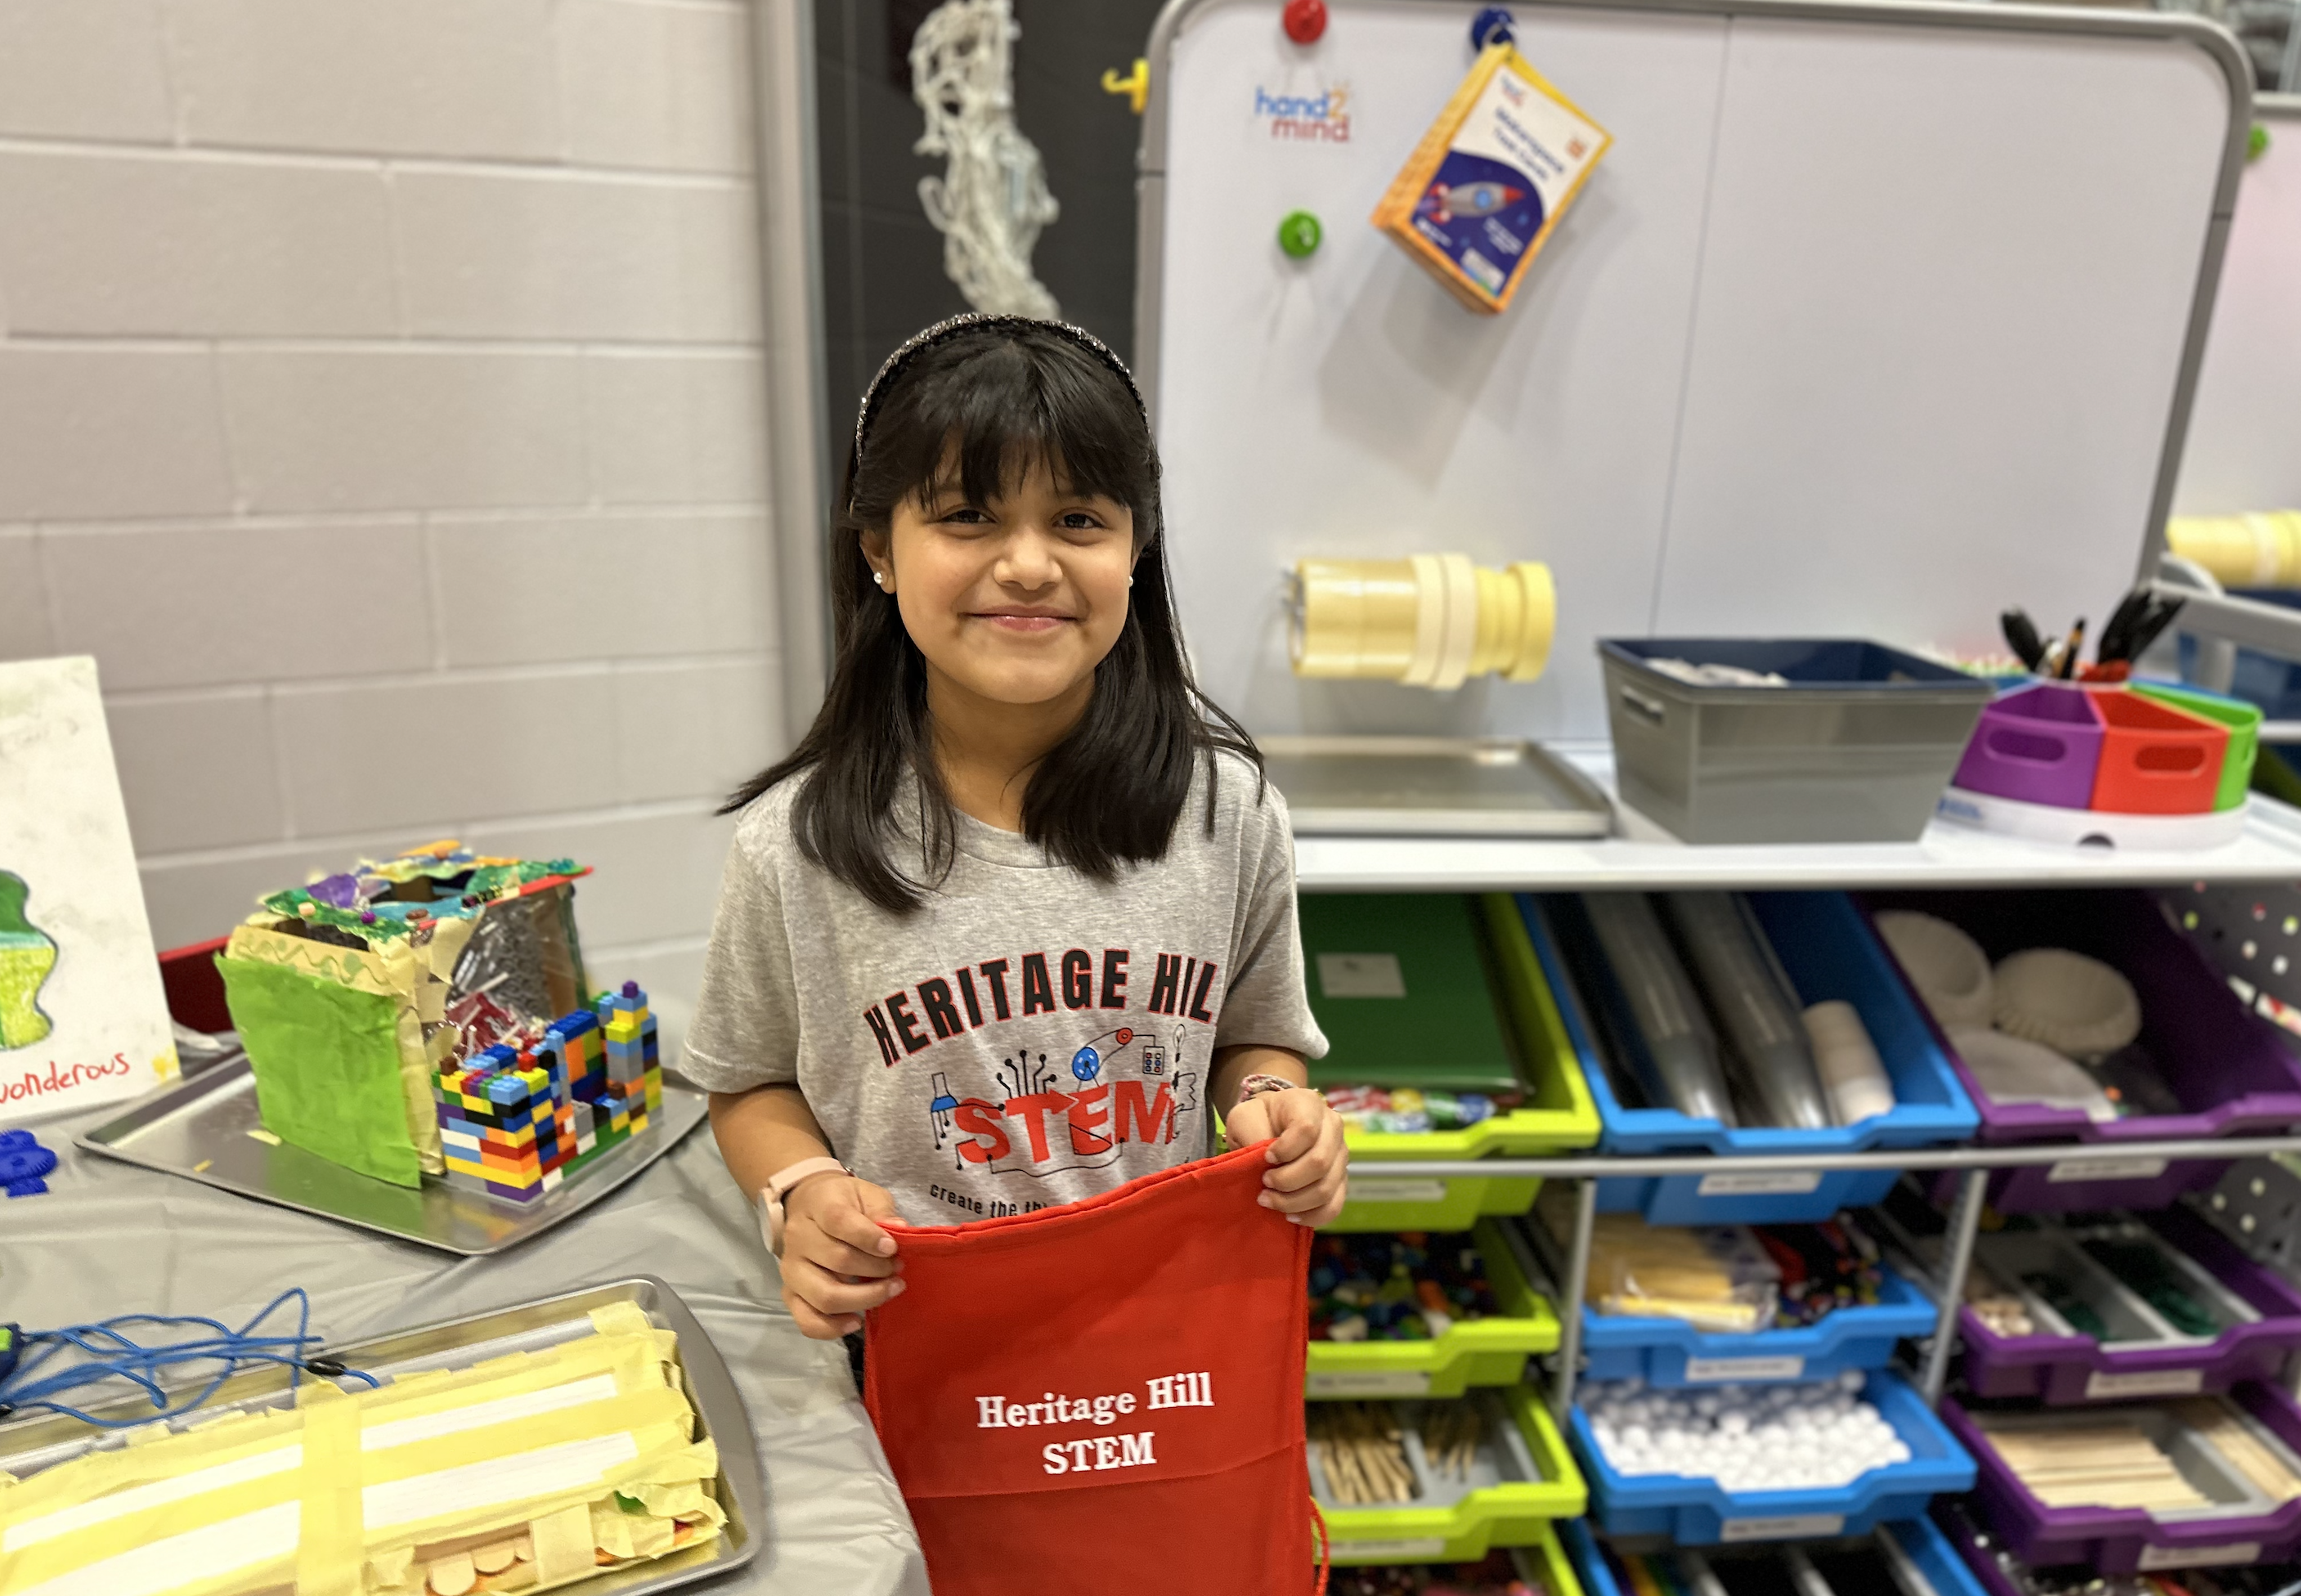 Student Achievement Fair -student holding a red STEM bag